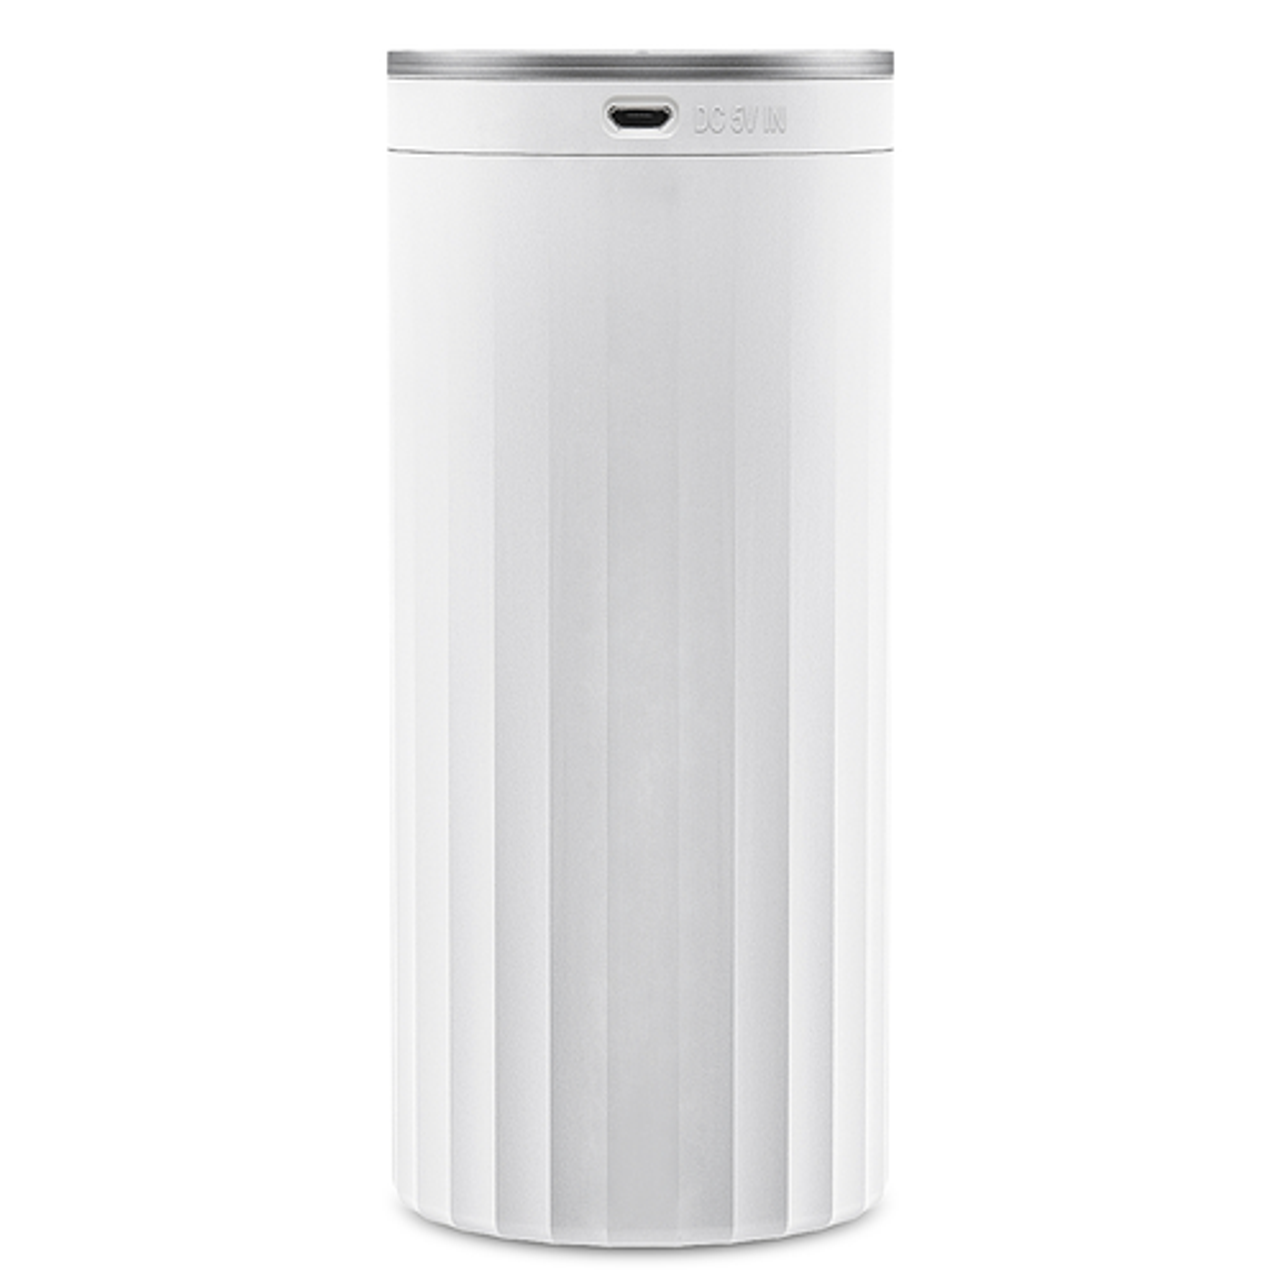 Levoit Mini Ultrasonic Cool Mist Humidifier - White